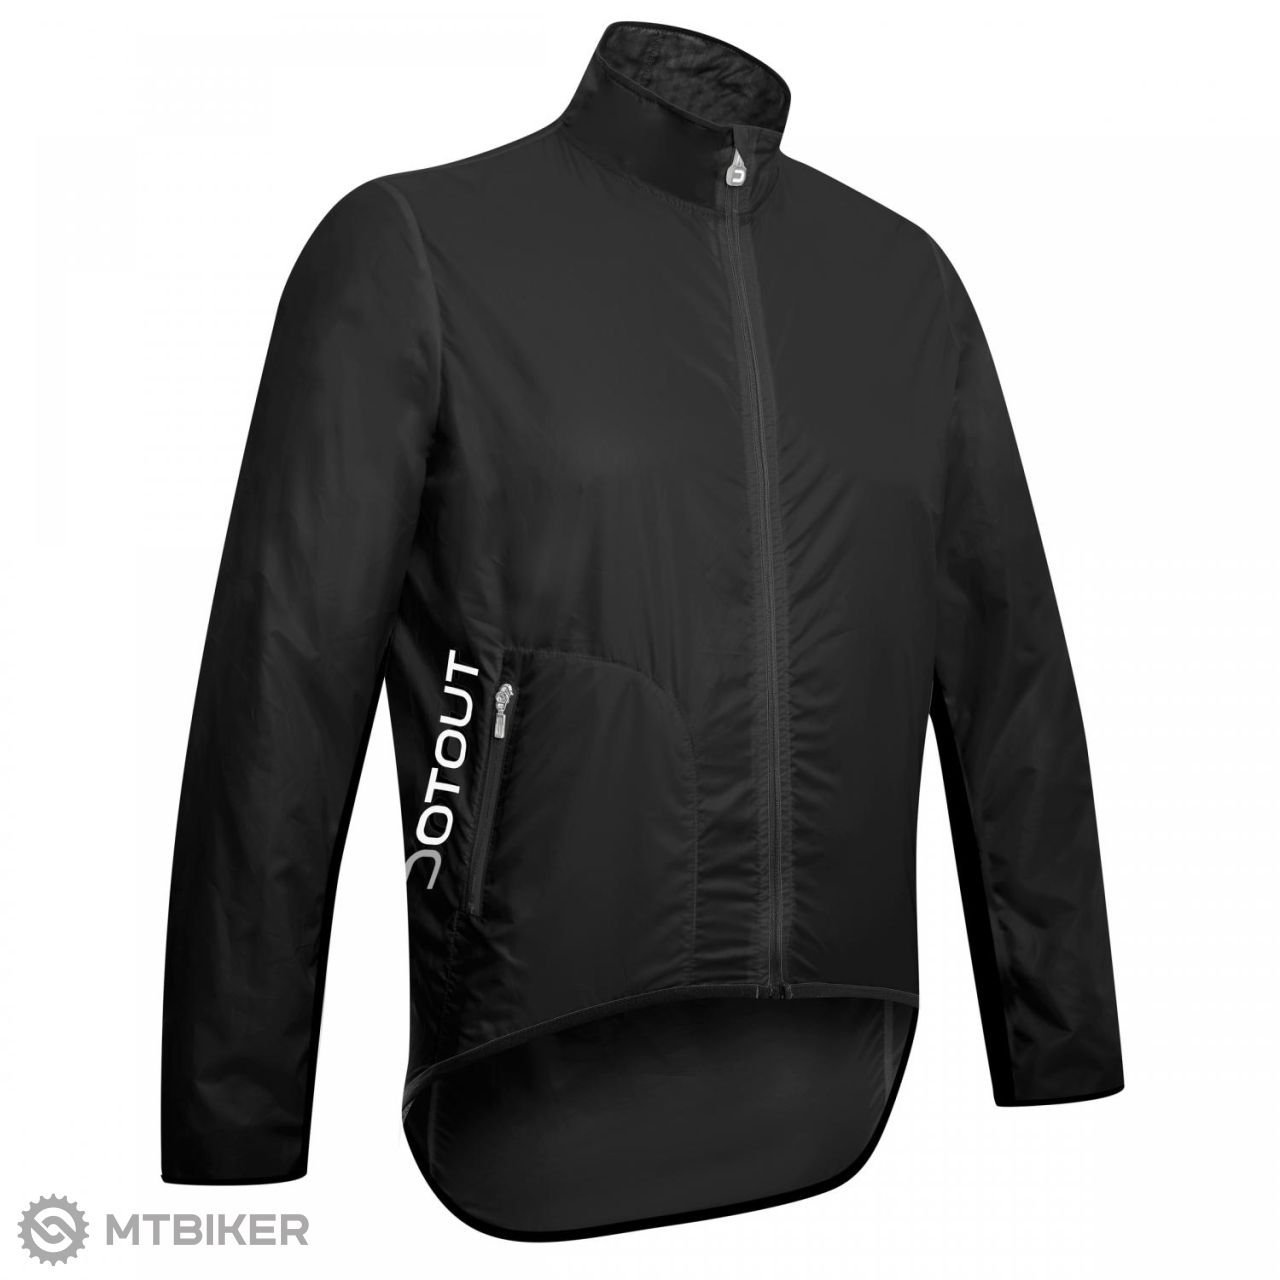 Dotout Tempo jacket, black